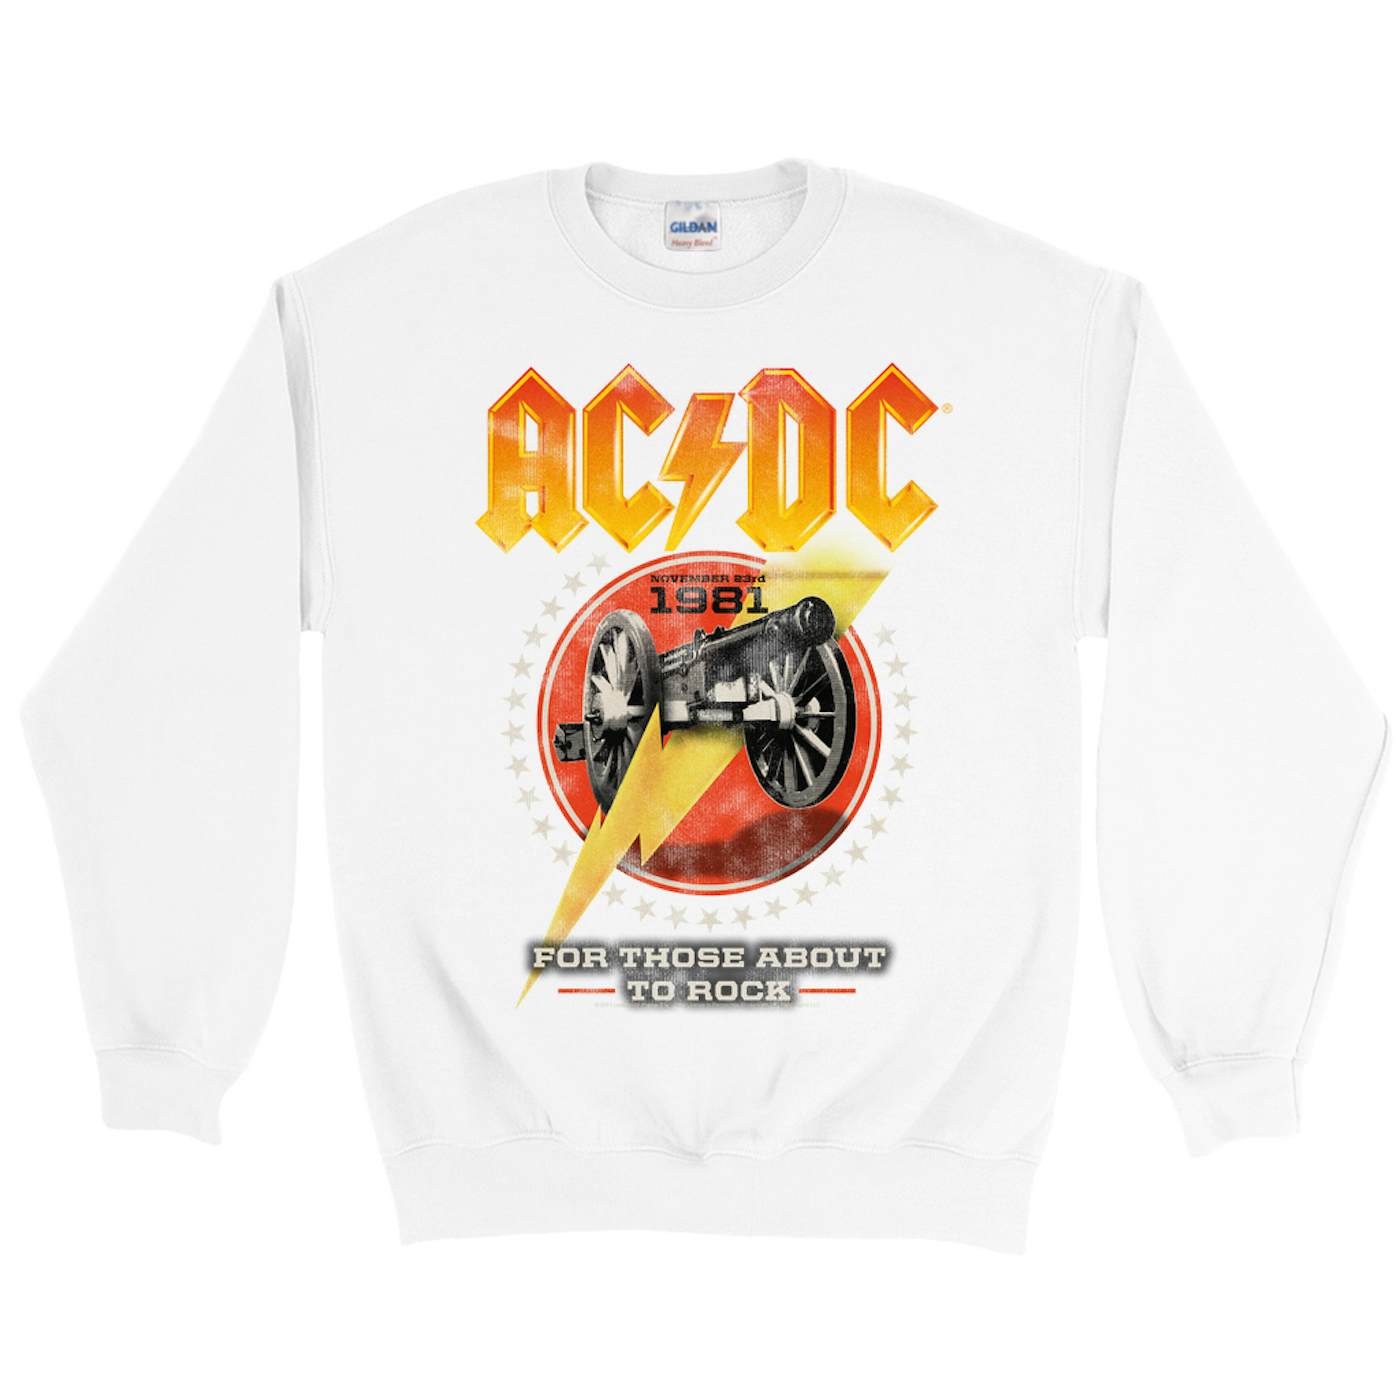 AC/DC Sweatshirt | For Those About To Rock Tour 1981 Sweatshirt